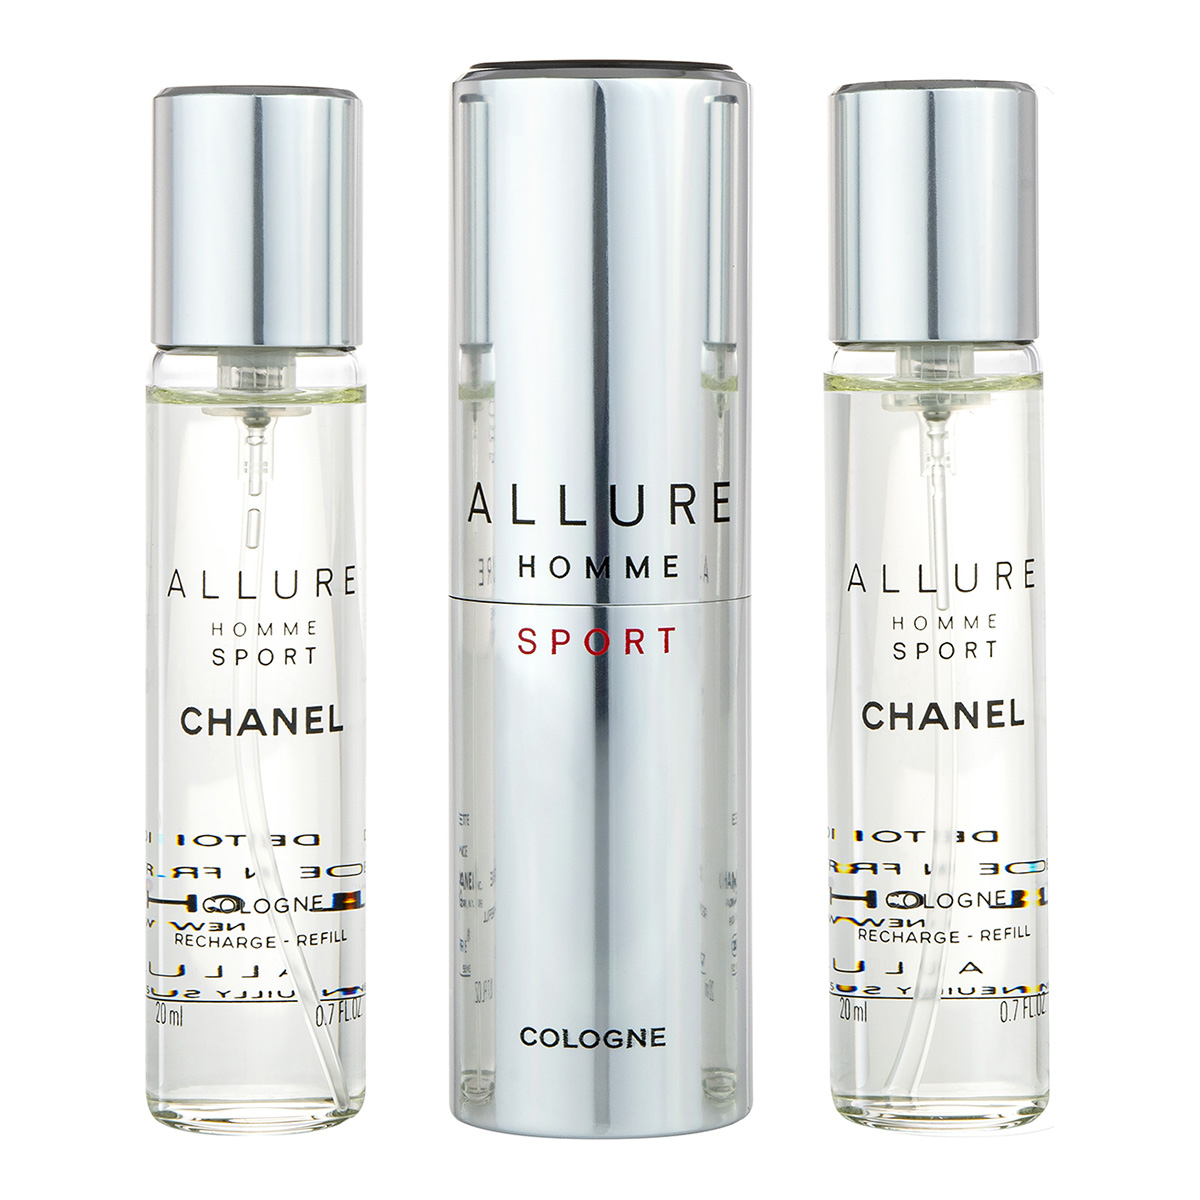 Chanel Allure Homme Sport Cologne Spray 20ml & 2 x 20ml Spray